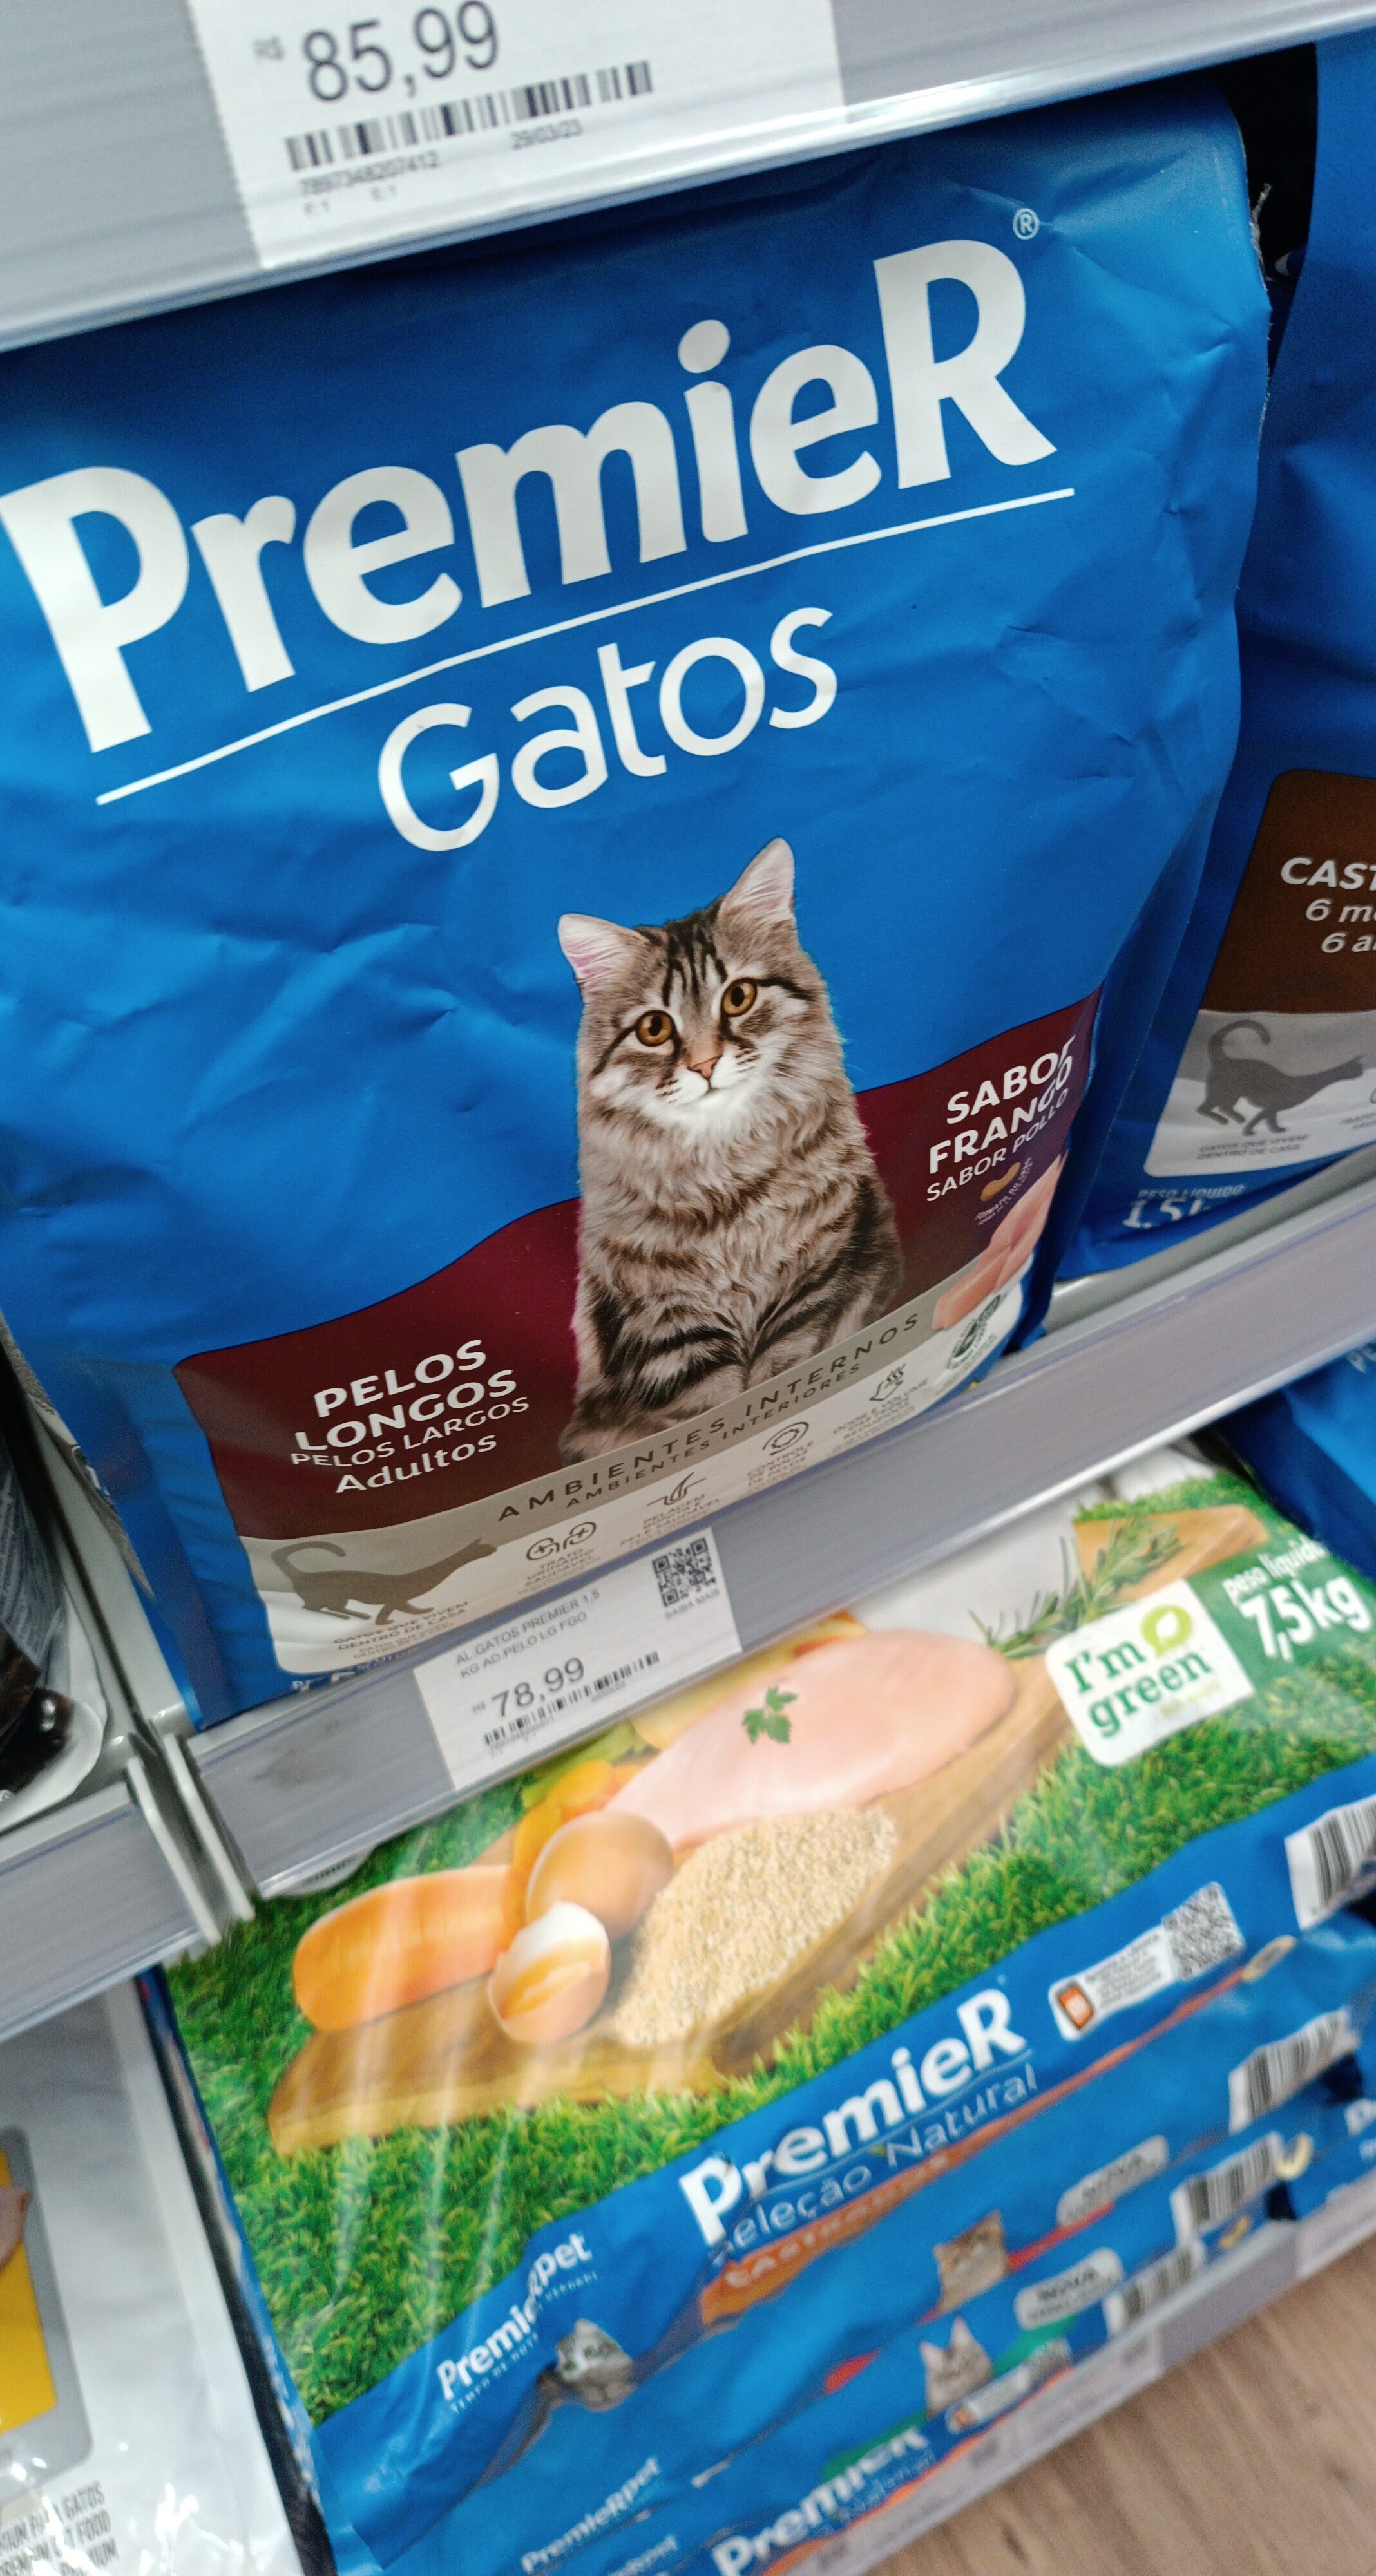 Premier gatos pelo longo fgo 1,5 - Product - pt